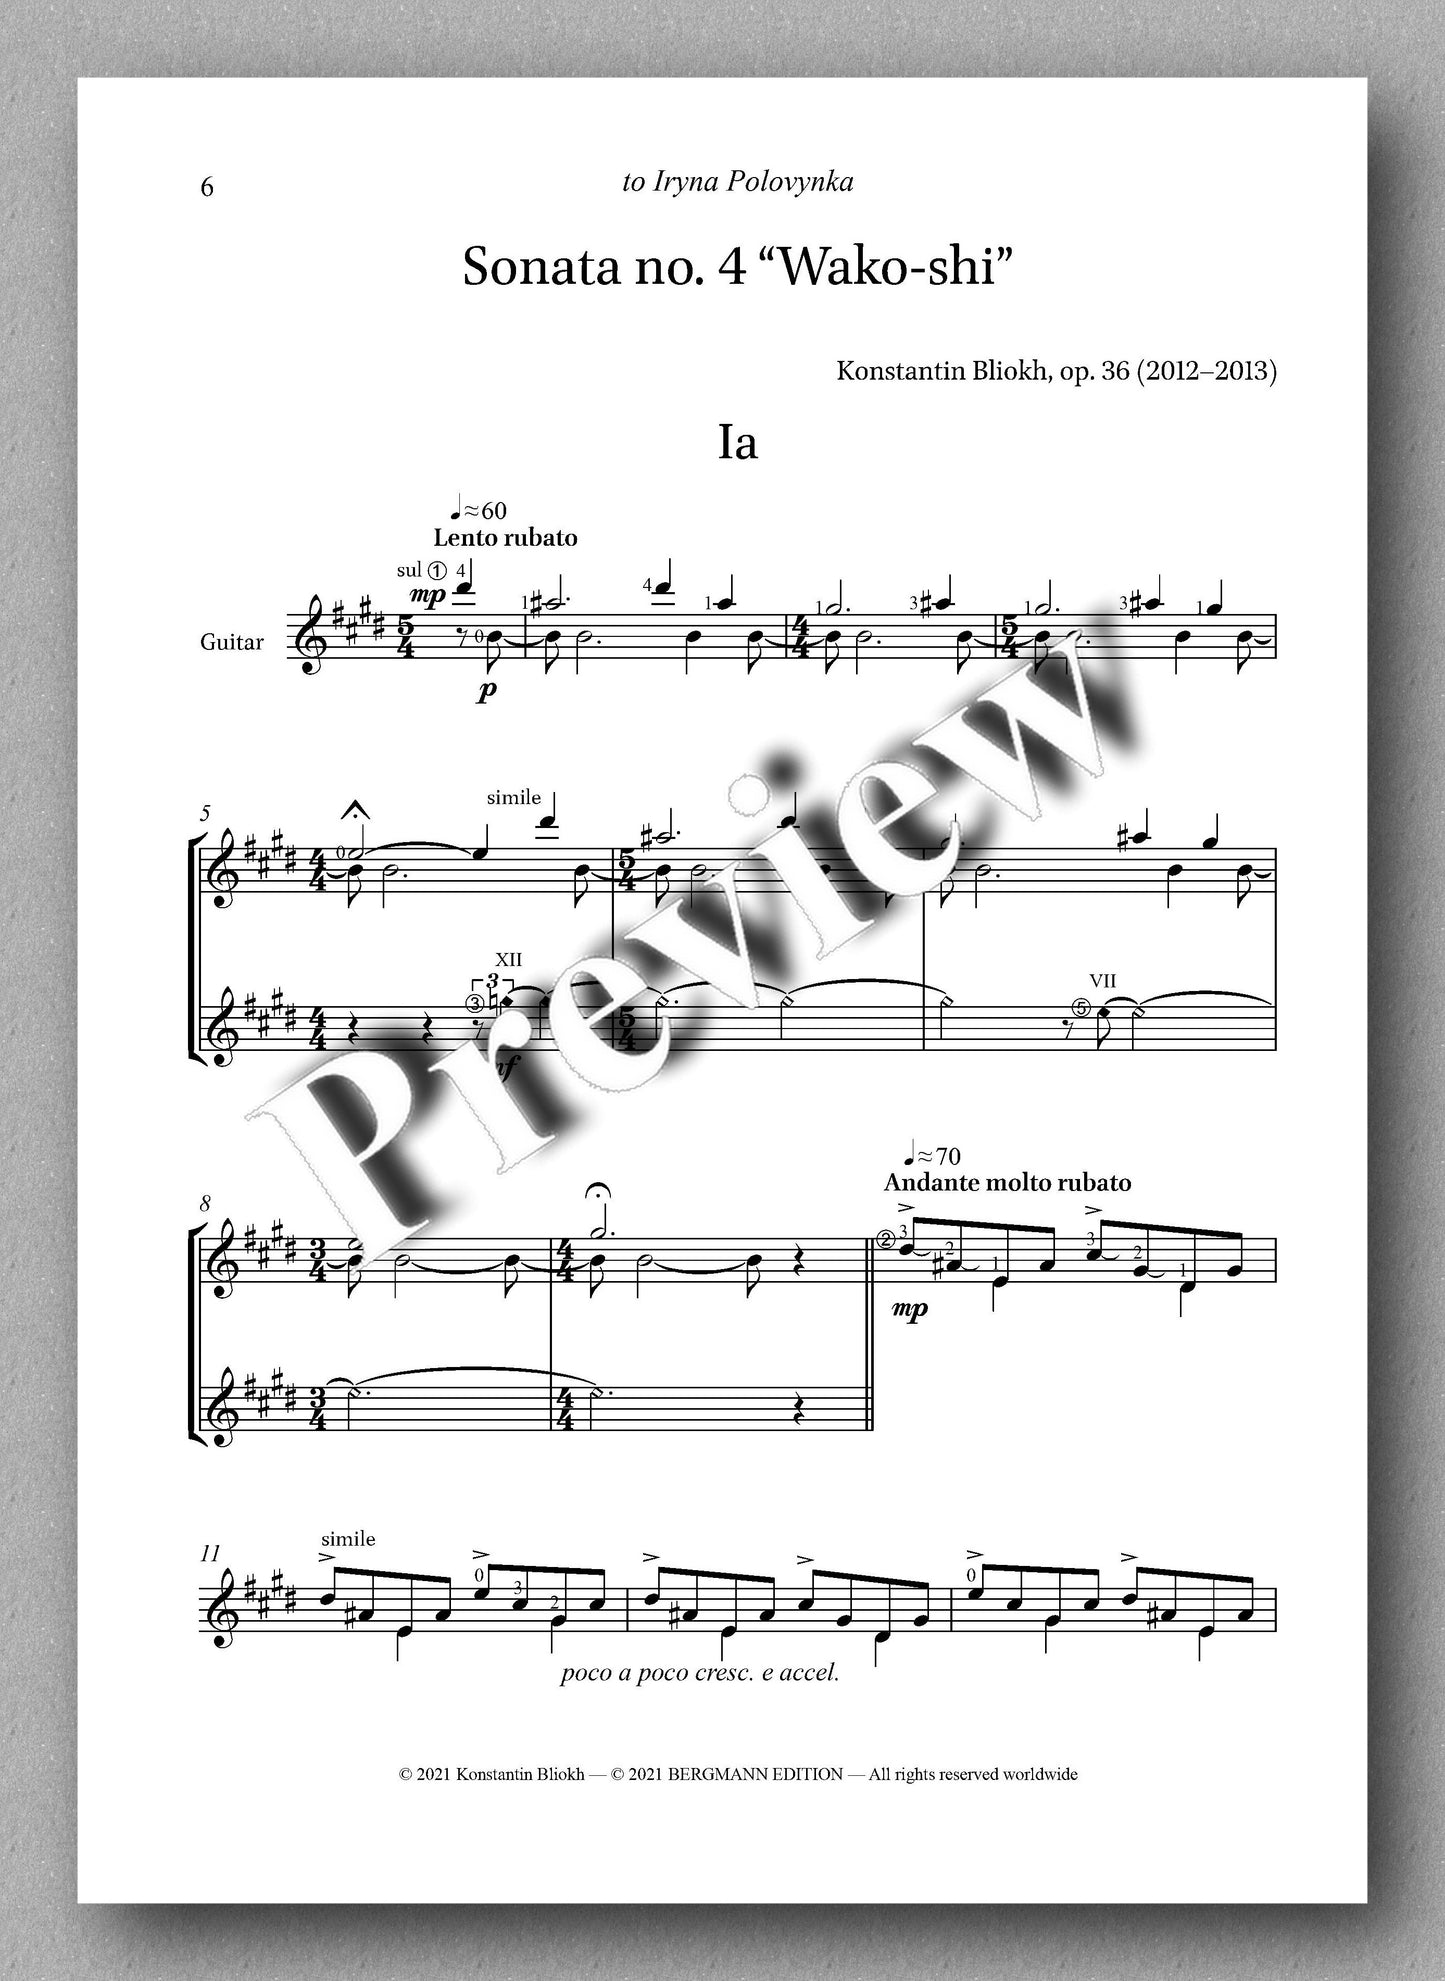 Bliokh, Sonata No. 4, Wako-Shi - music score  1